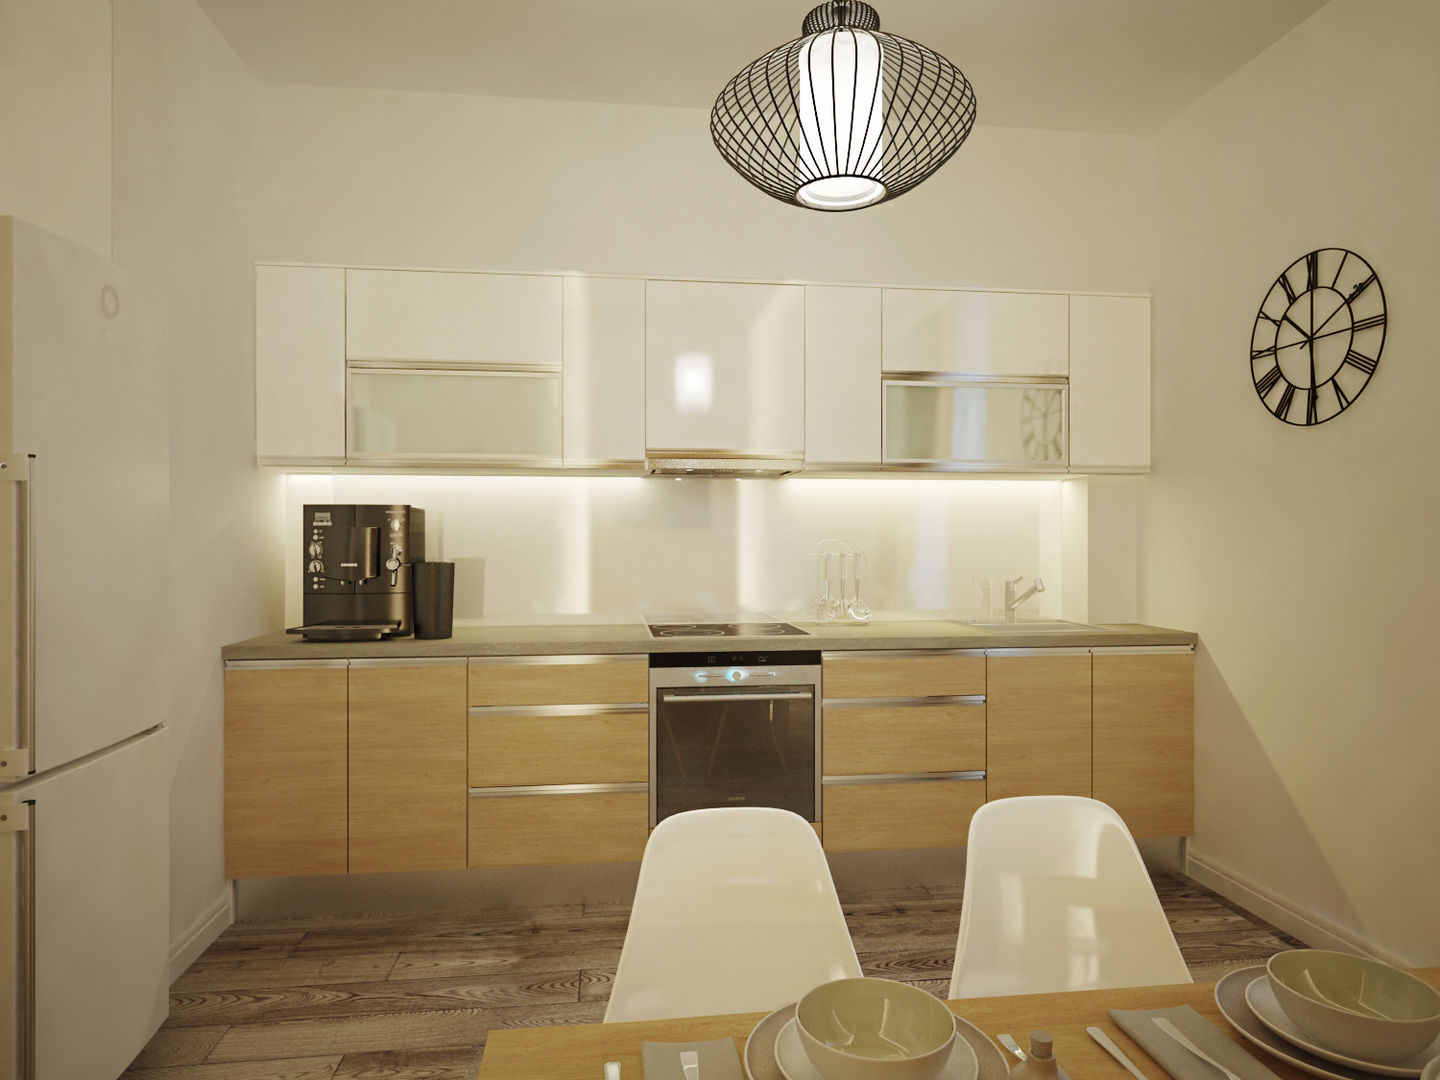 Квартира в современном минимализме, Polovets design studio Polovets design studio Minimalist kitchen